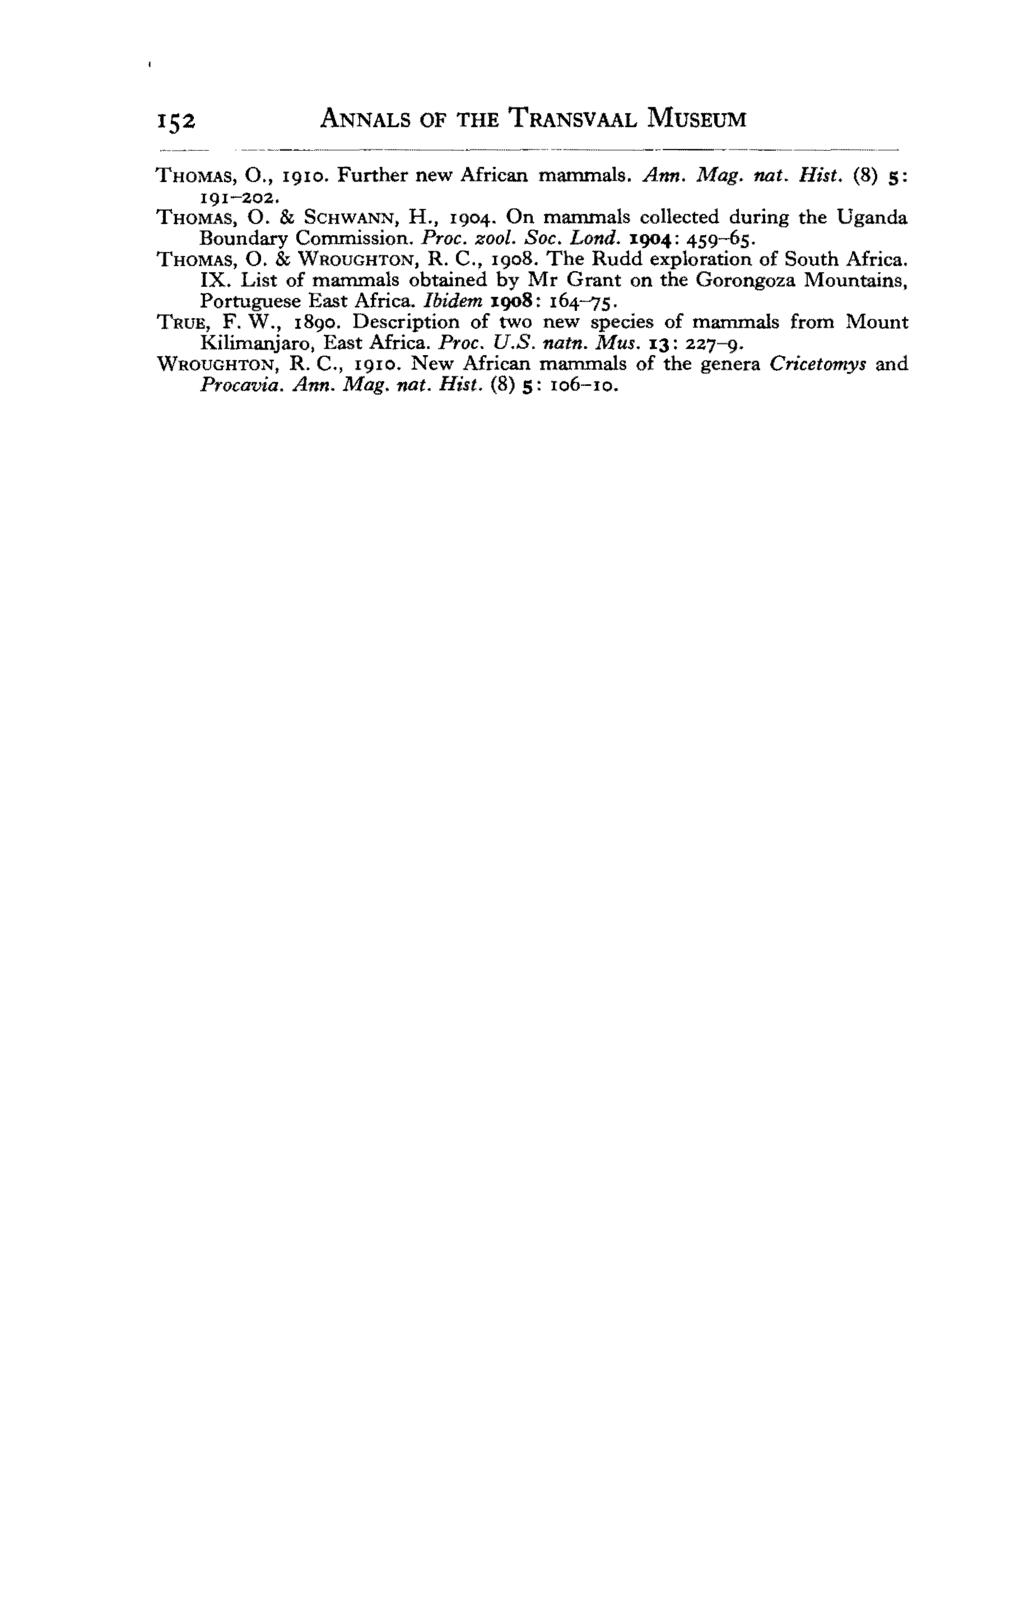 ANNALS OF THE TRANSVAAL MUSEUM THOMAS, 0., 1910. Further new African mammals. Ann. Mag. nat. Hist. (8) 5: 191-202. THOMAS, O. & SCHWANN, H., 1904.